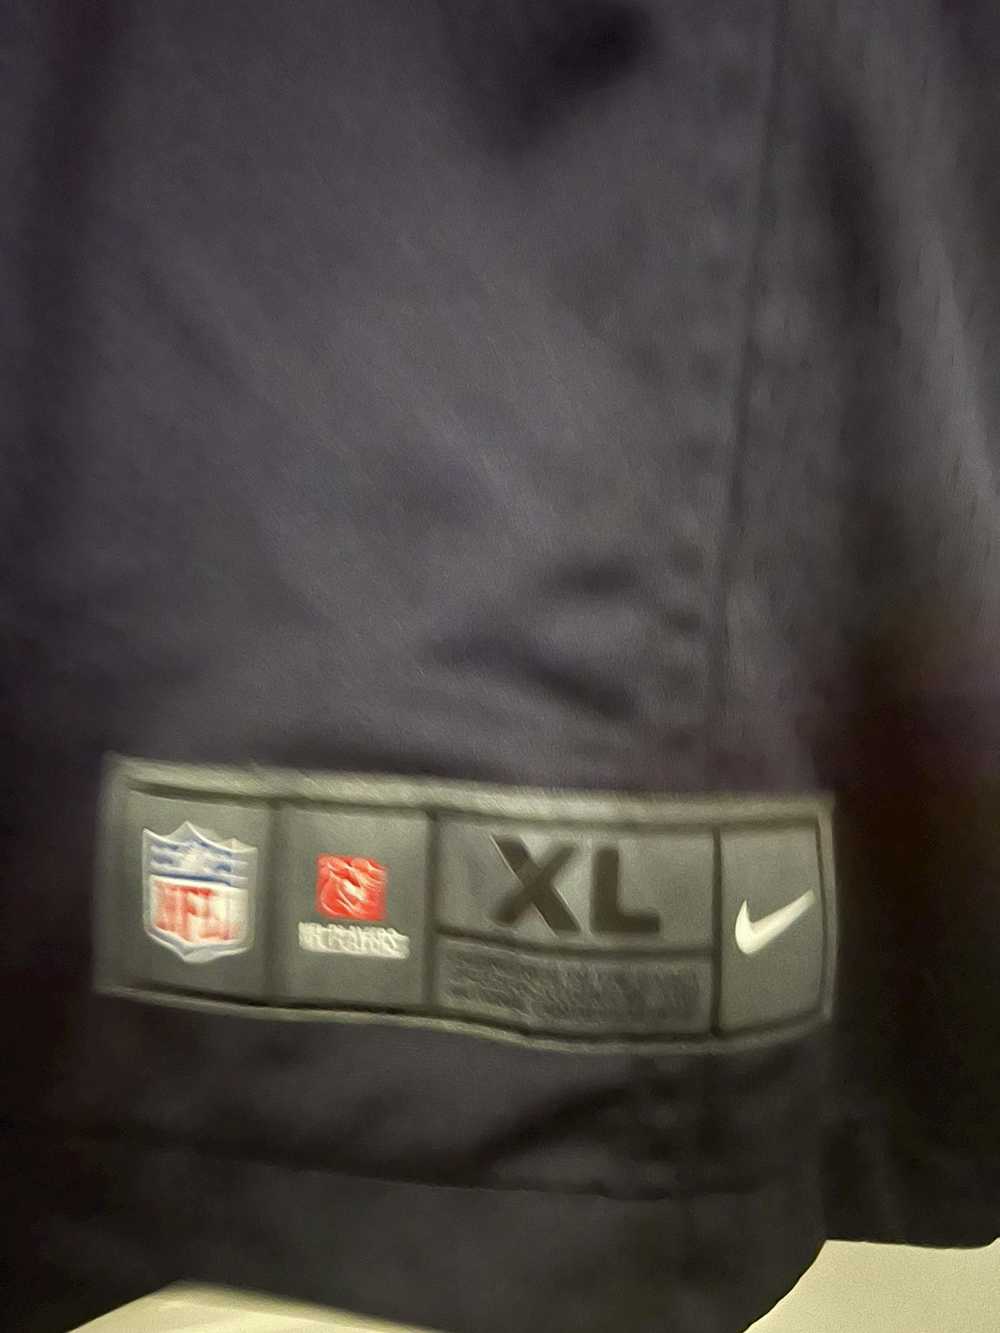 Nike Khalil Mack Bears jersey - image 3